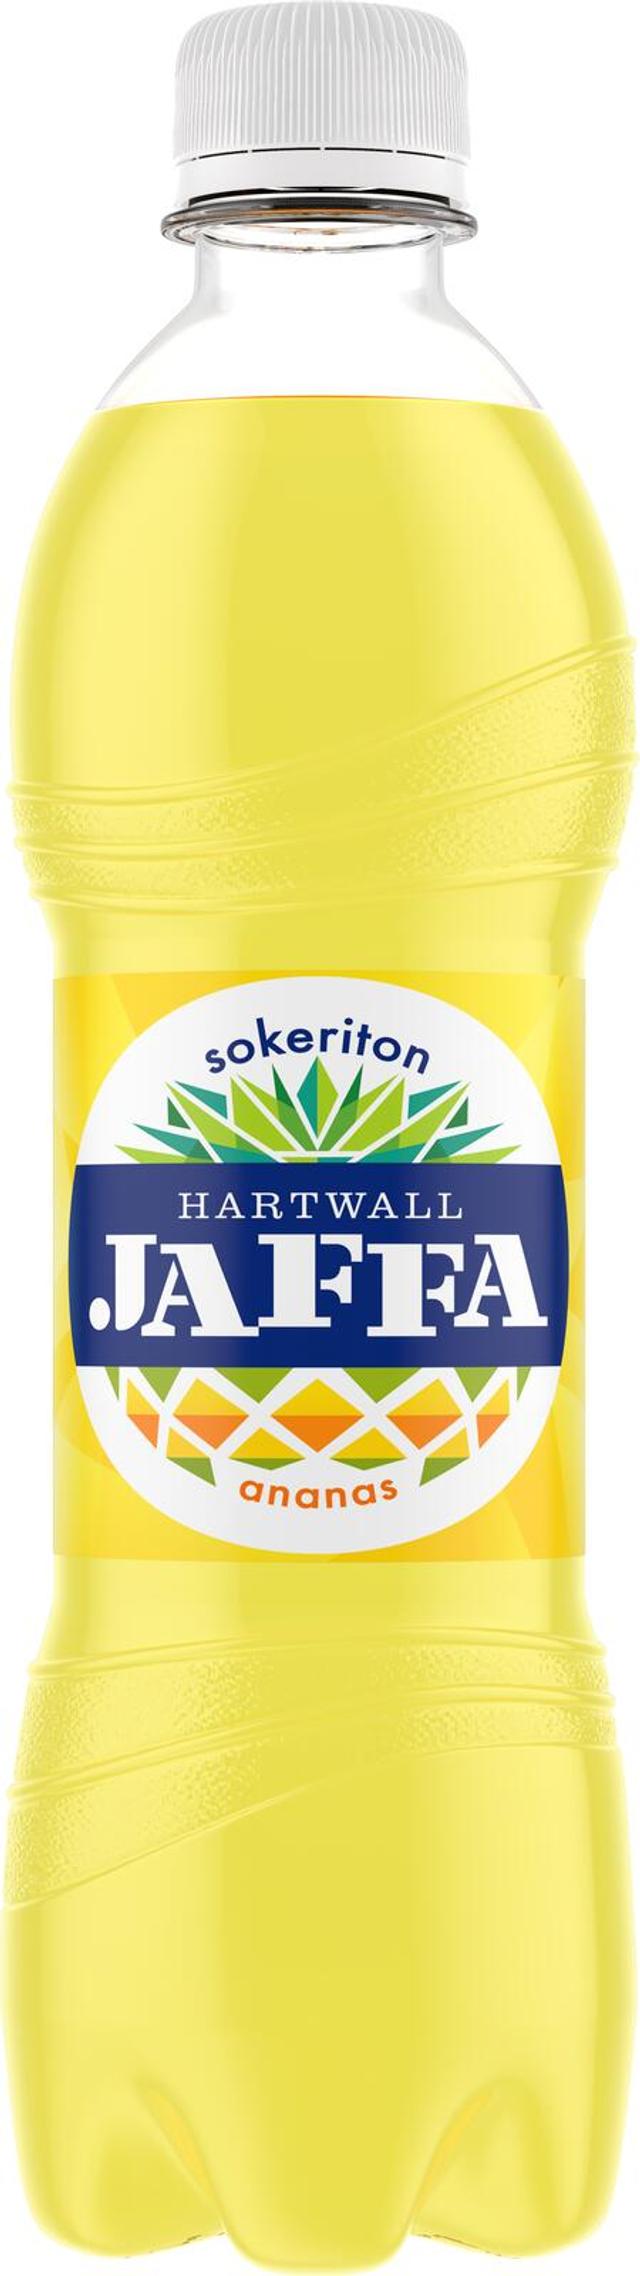 Hartwall Jaffa Ananas Sokeriton virvoitusjuoma 0,5 l